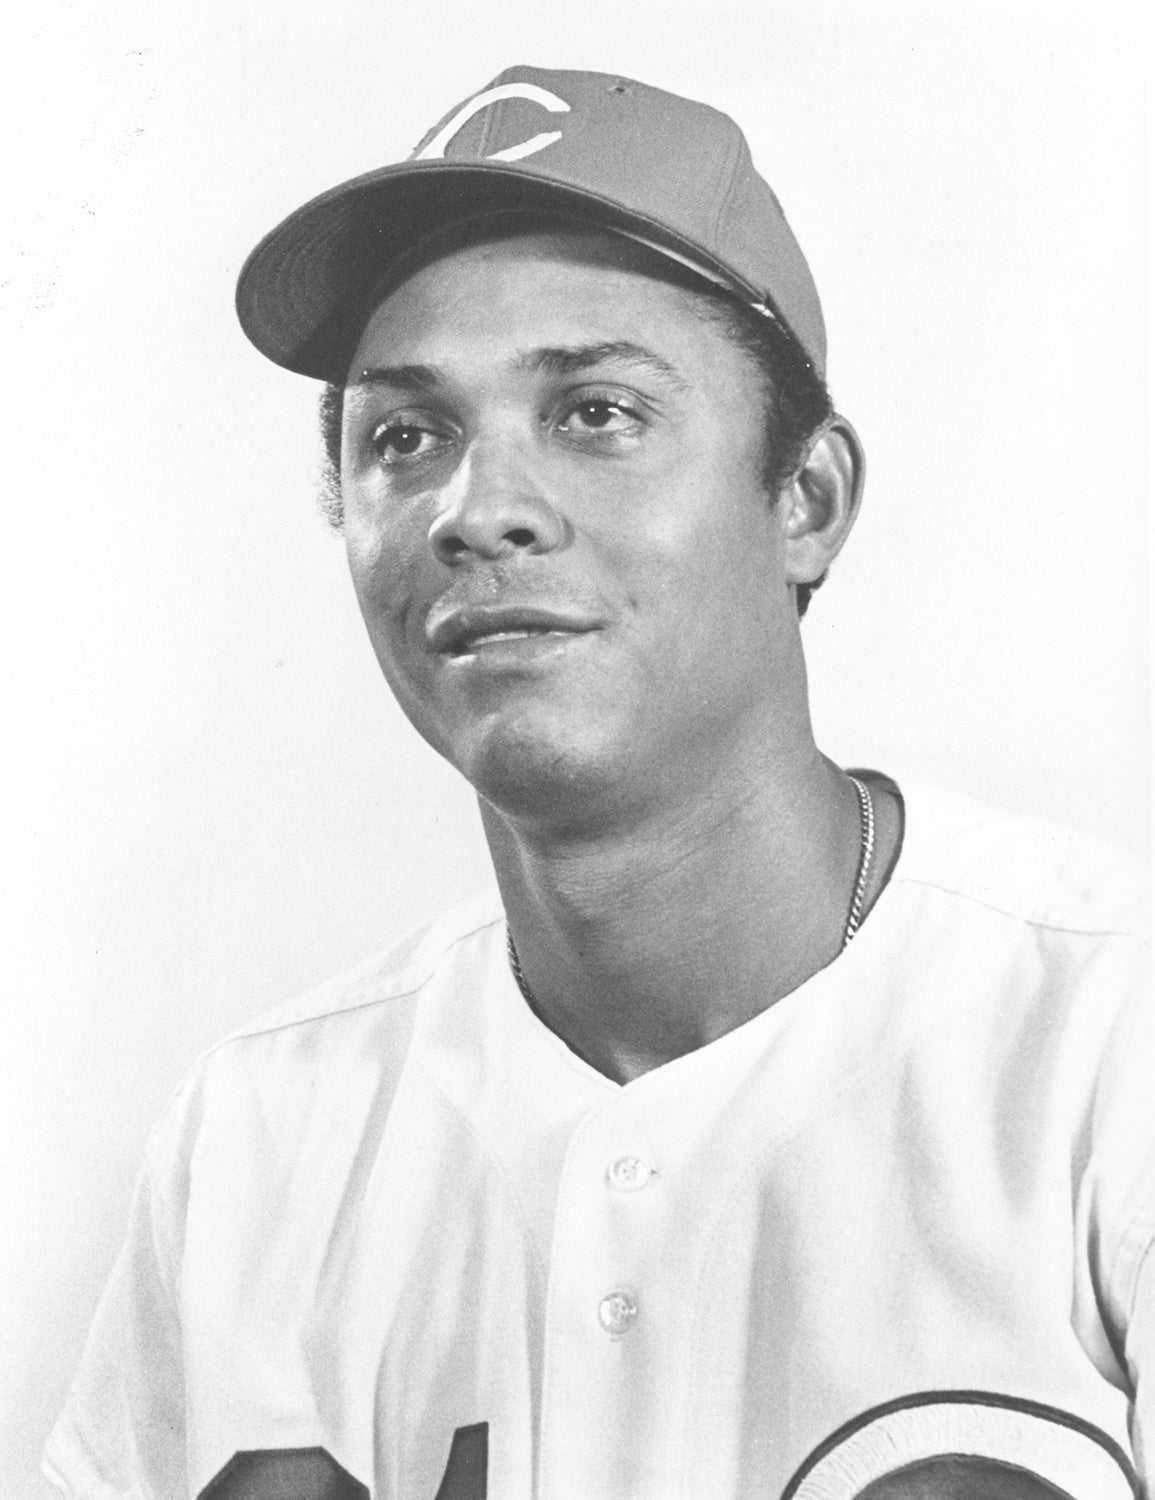 Black and white portrait of Tony Perez